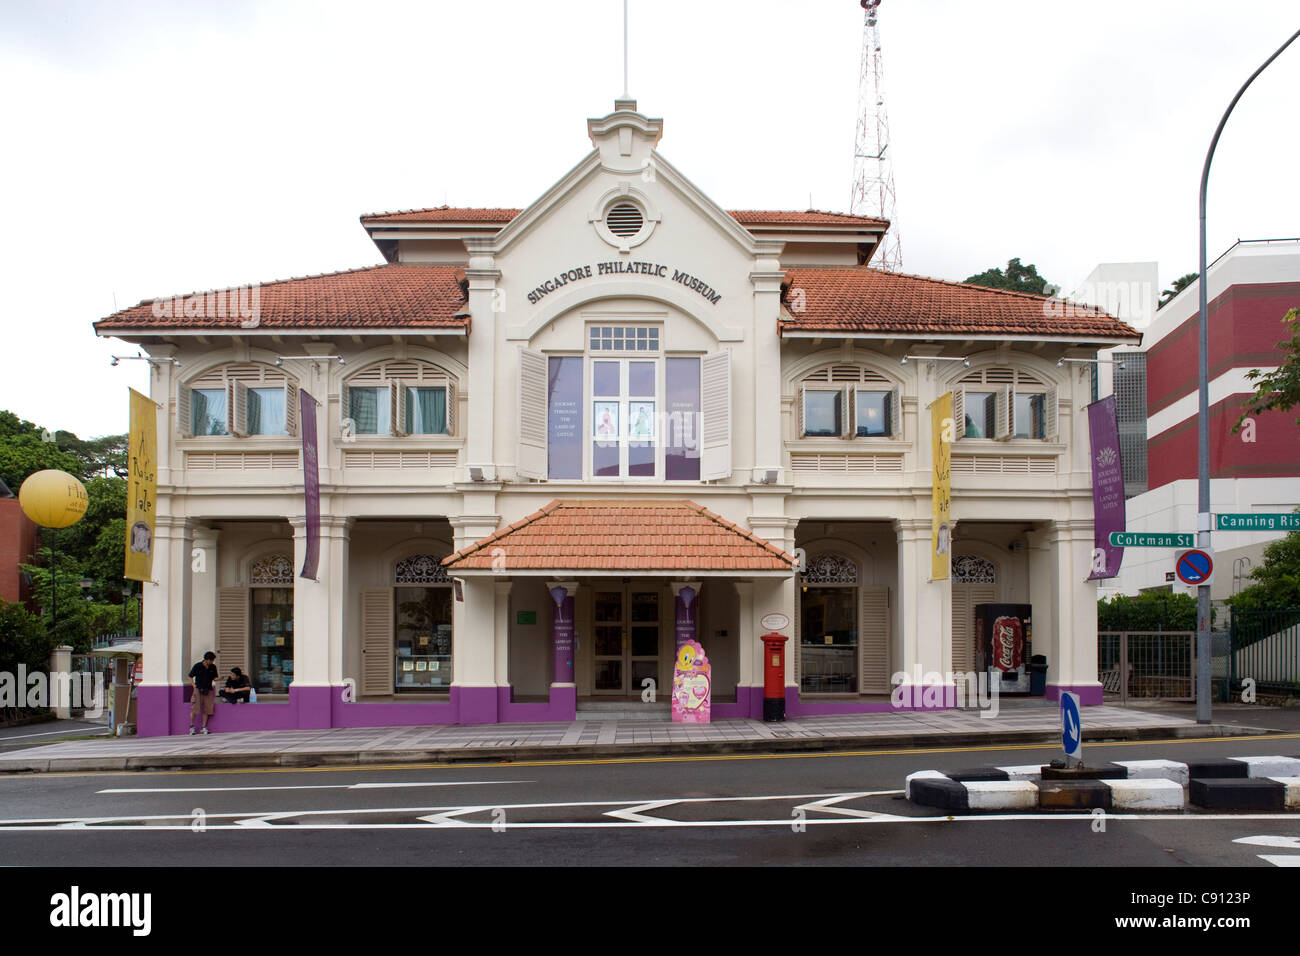 Singapore Philatelic Museum Banque D'Images